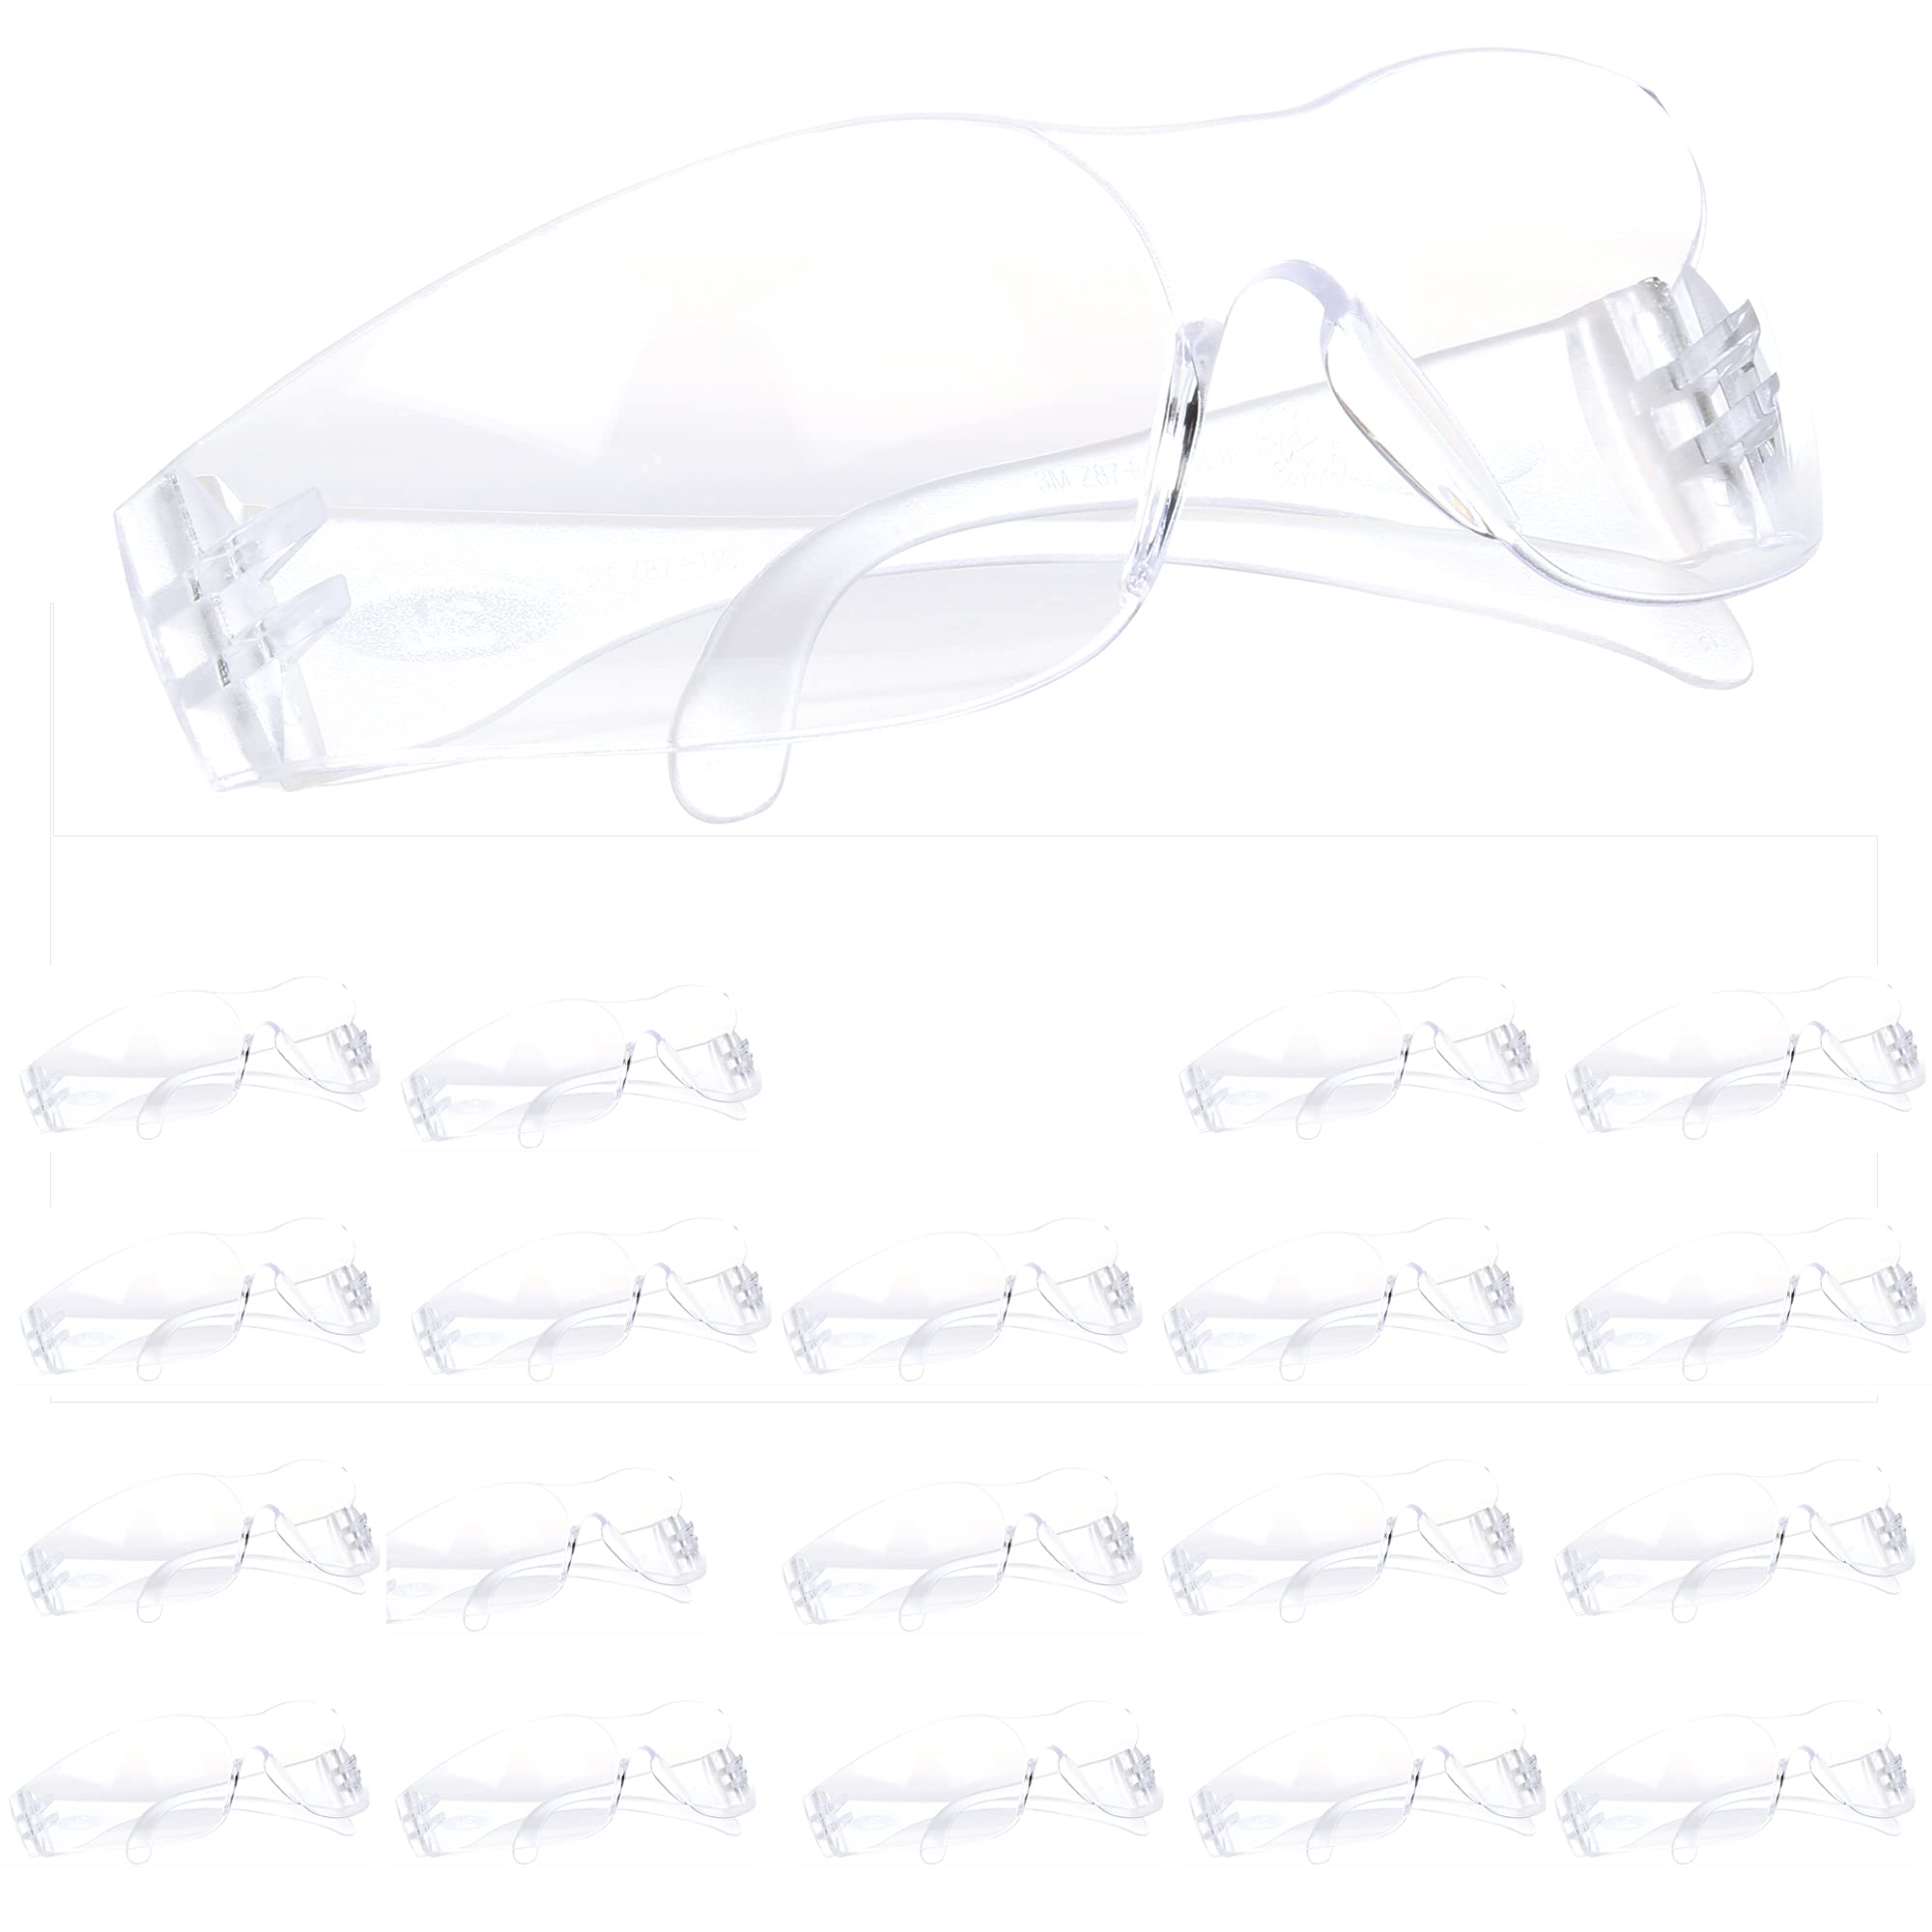 3M Safety Glasses, Virtua, 100 Pair, ANSI Z87, Clear Lens, Clear Frame